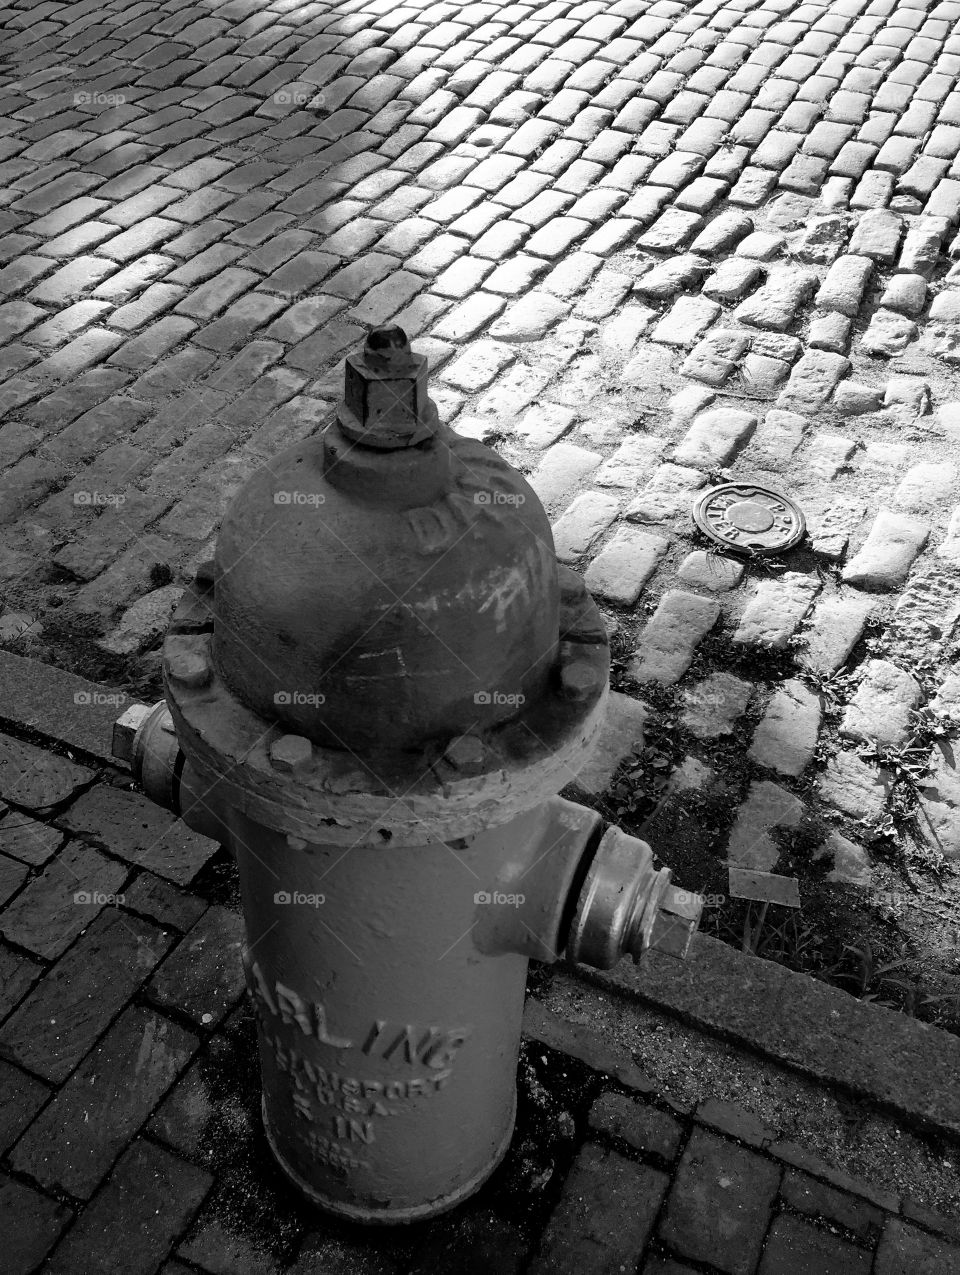 Fire Hydrant and Cobblestone Street